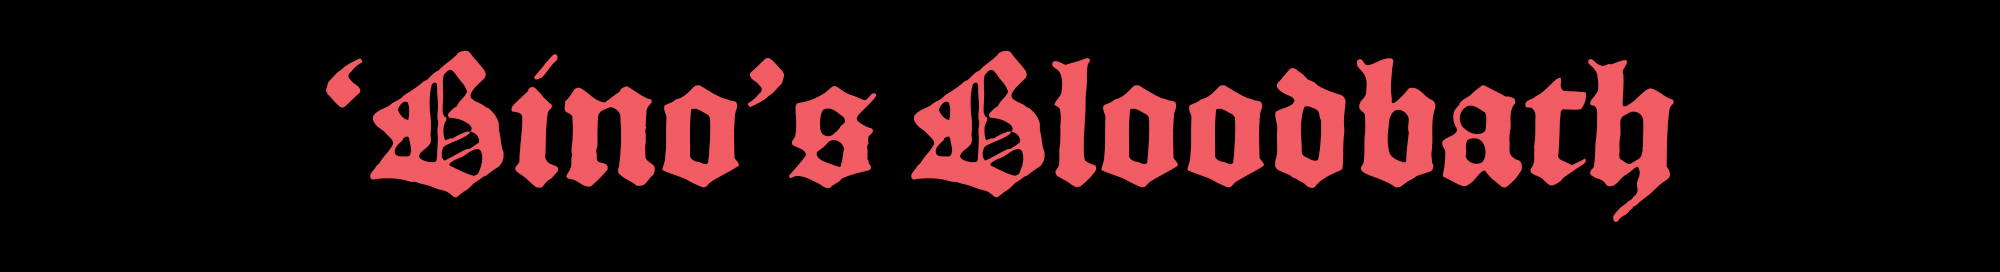 Binos Bloodbath subhead 2000